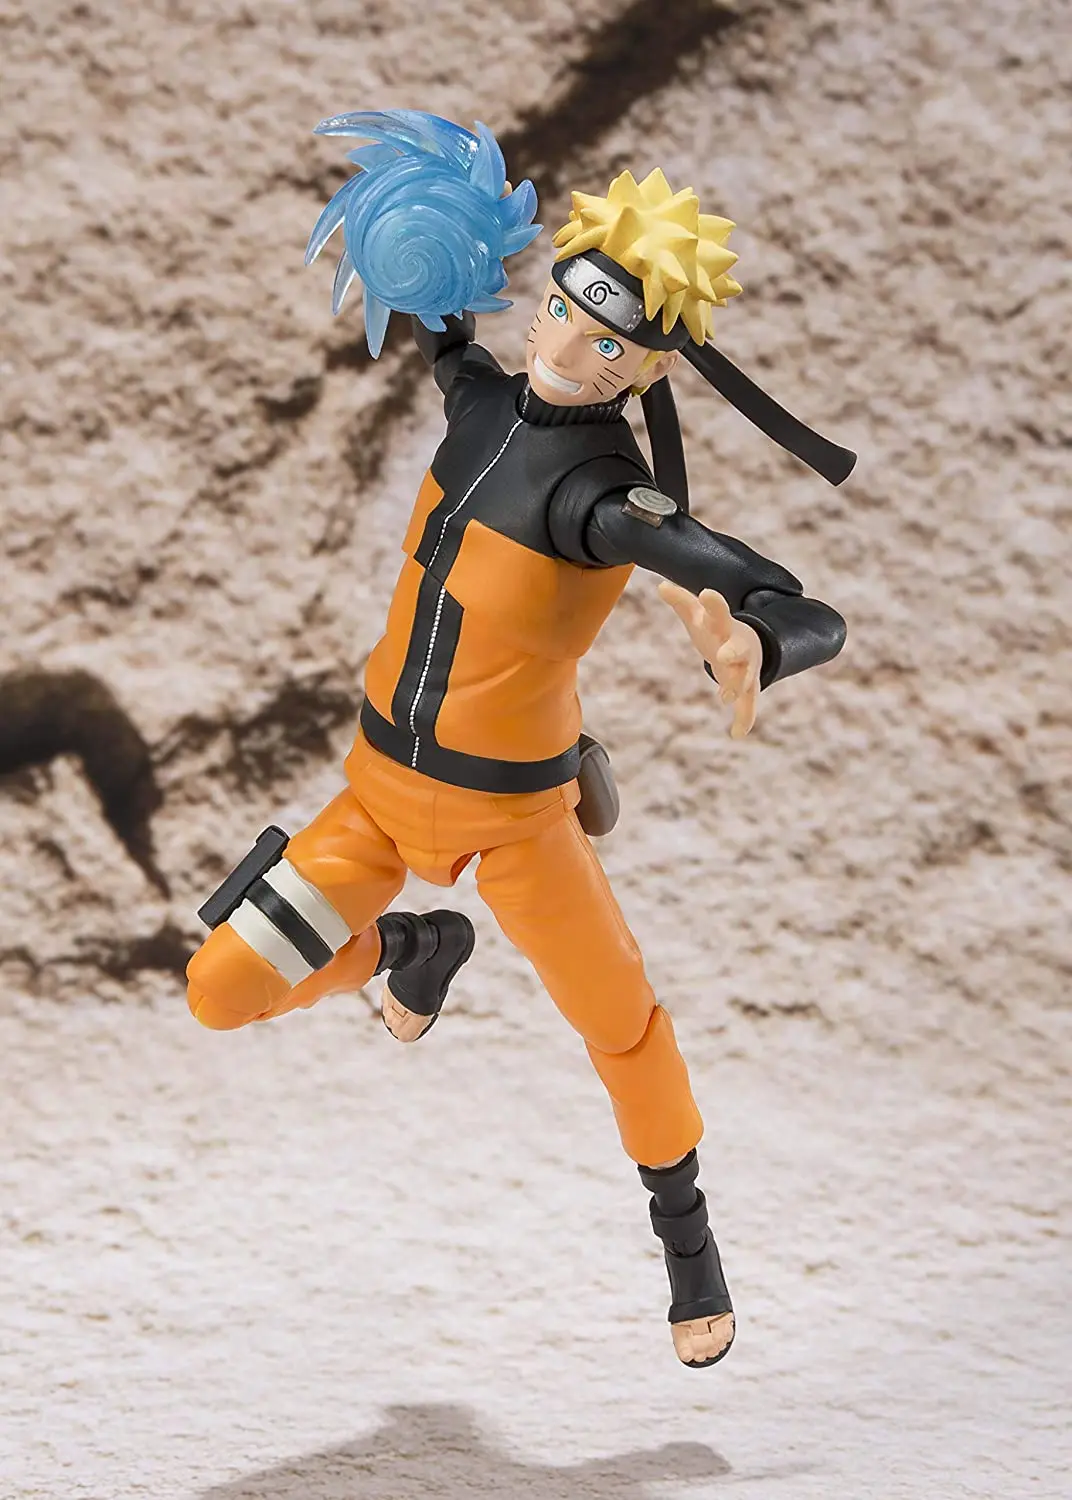  Bandai Tamashii Nations S.H. Figuarts Naruto Action Figure :  Toys & Games